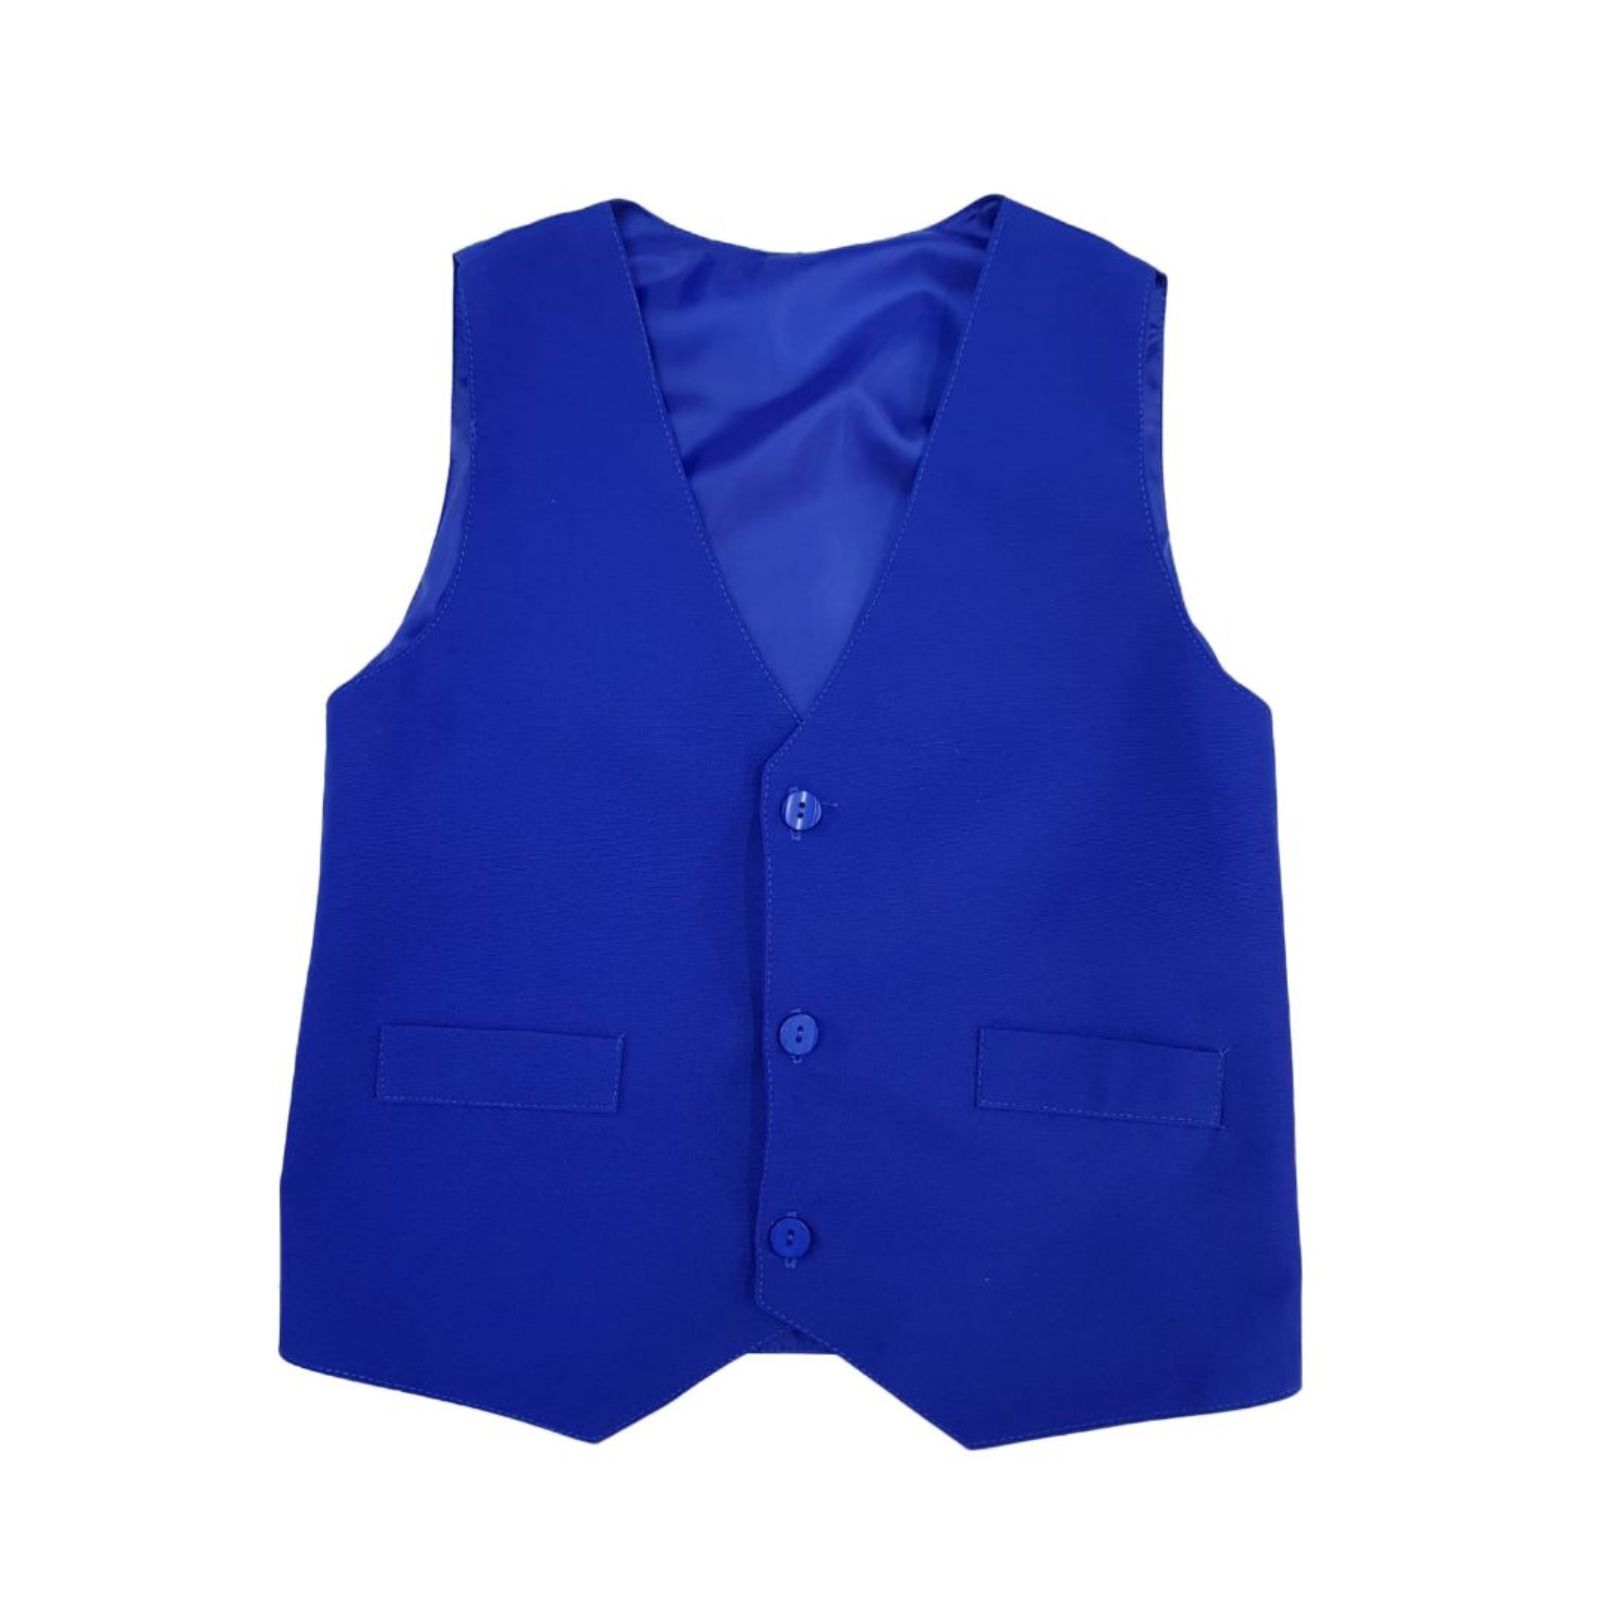 Vesta albastra- uniforma scolara 1